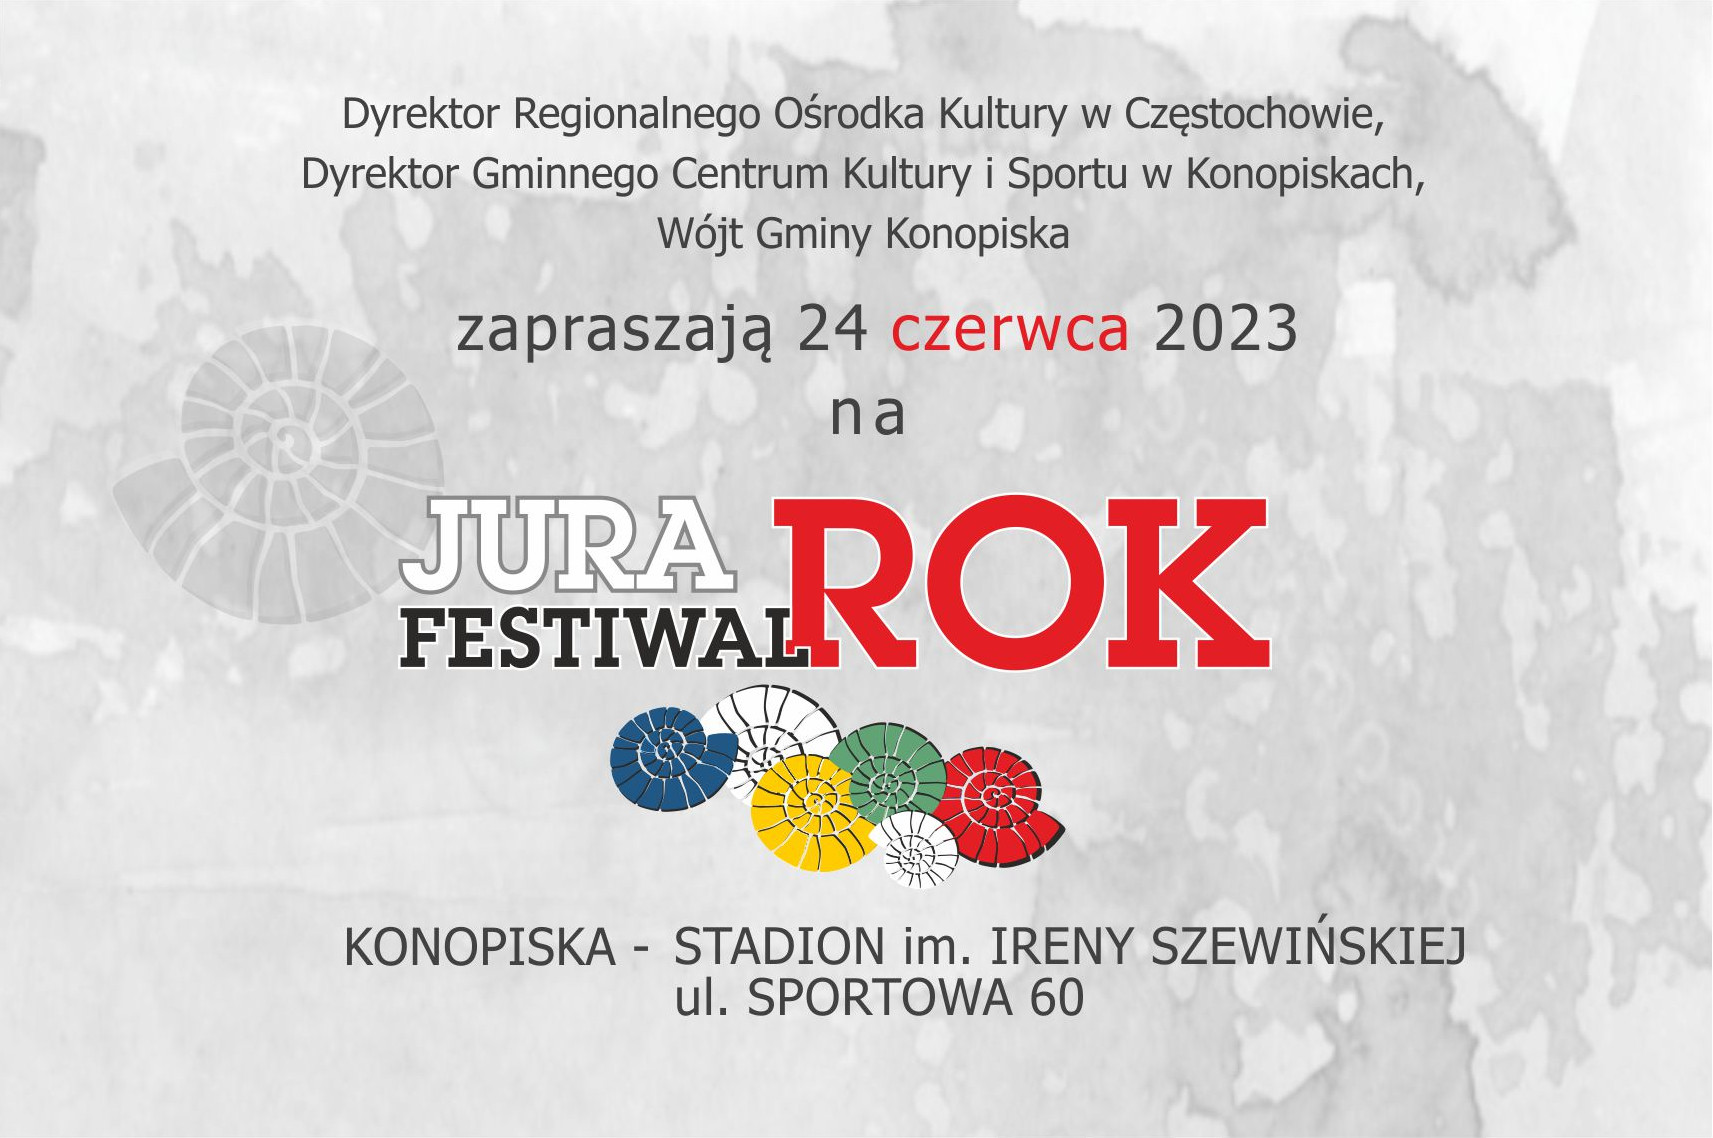 Plakat promujący Jura Rok Festiwal